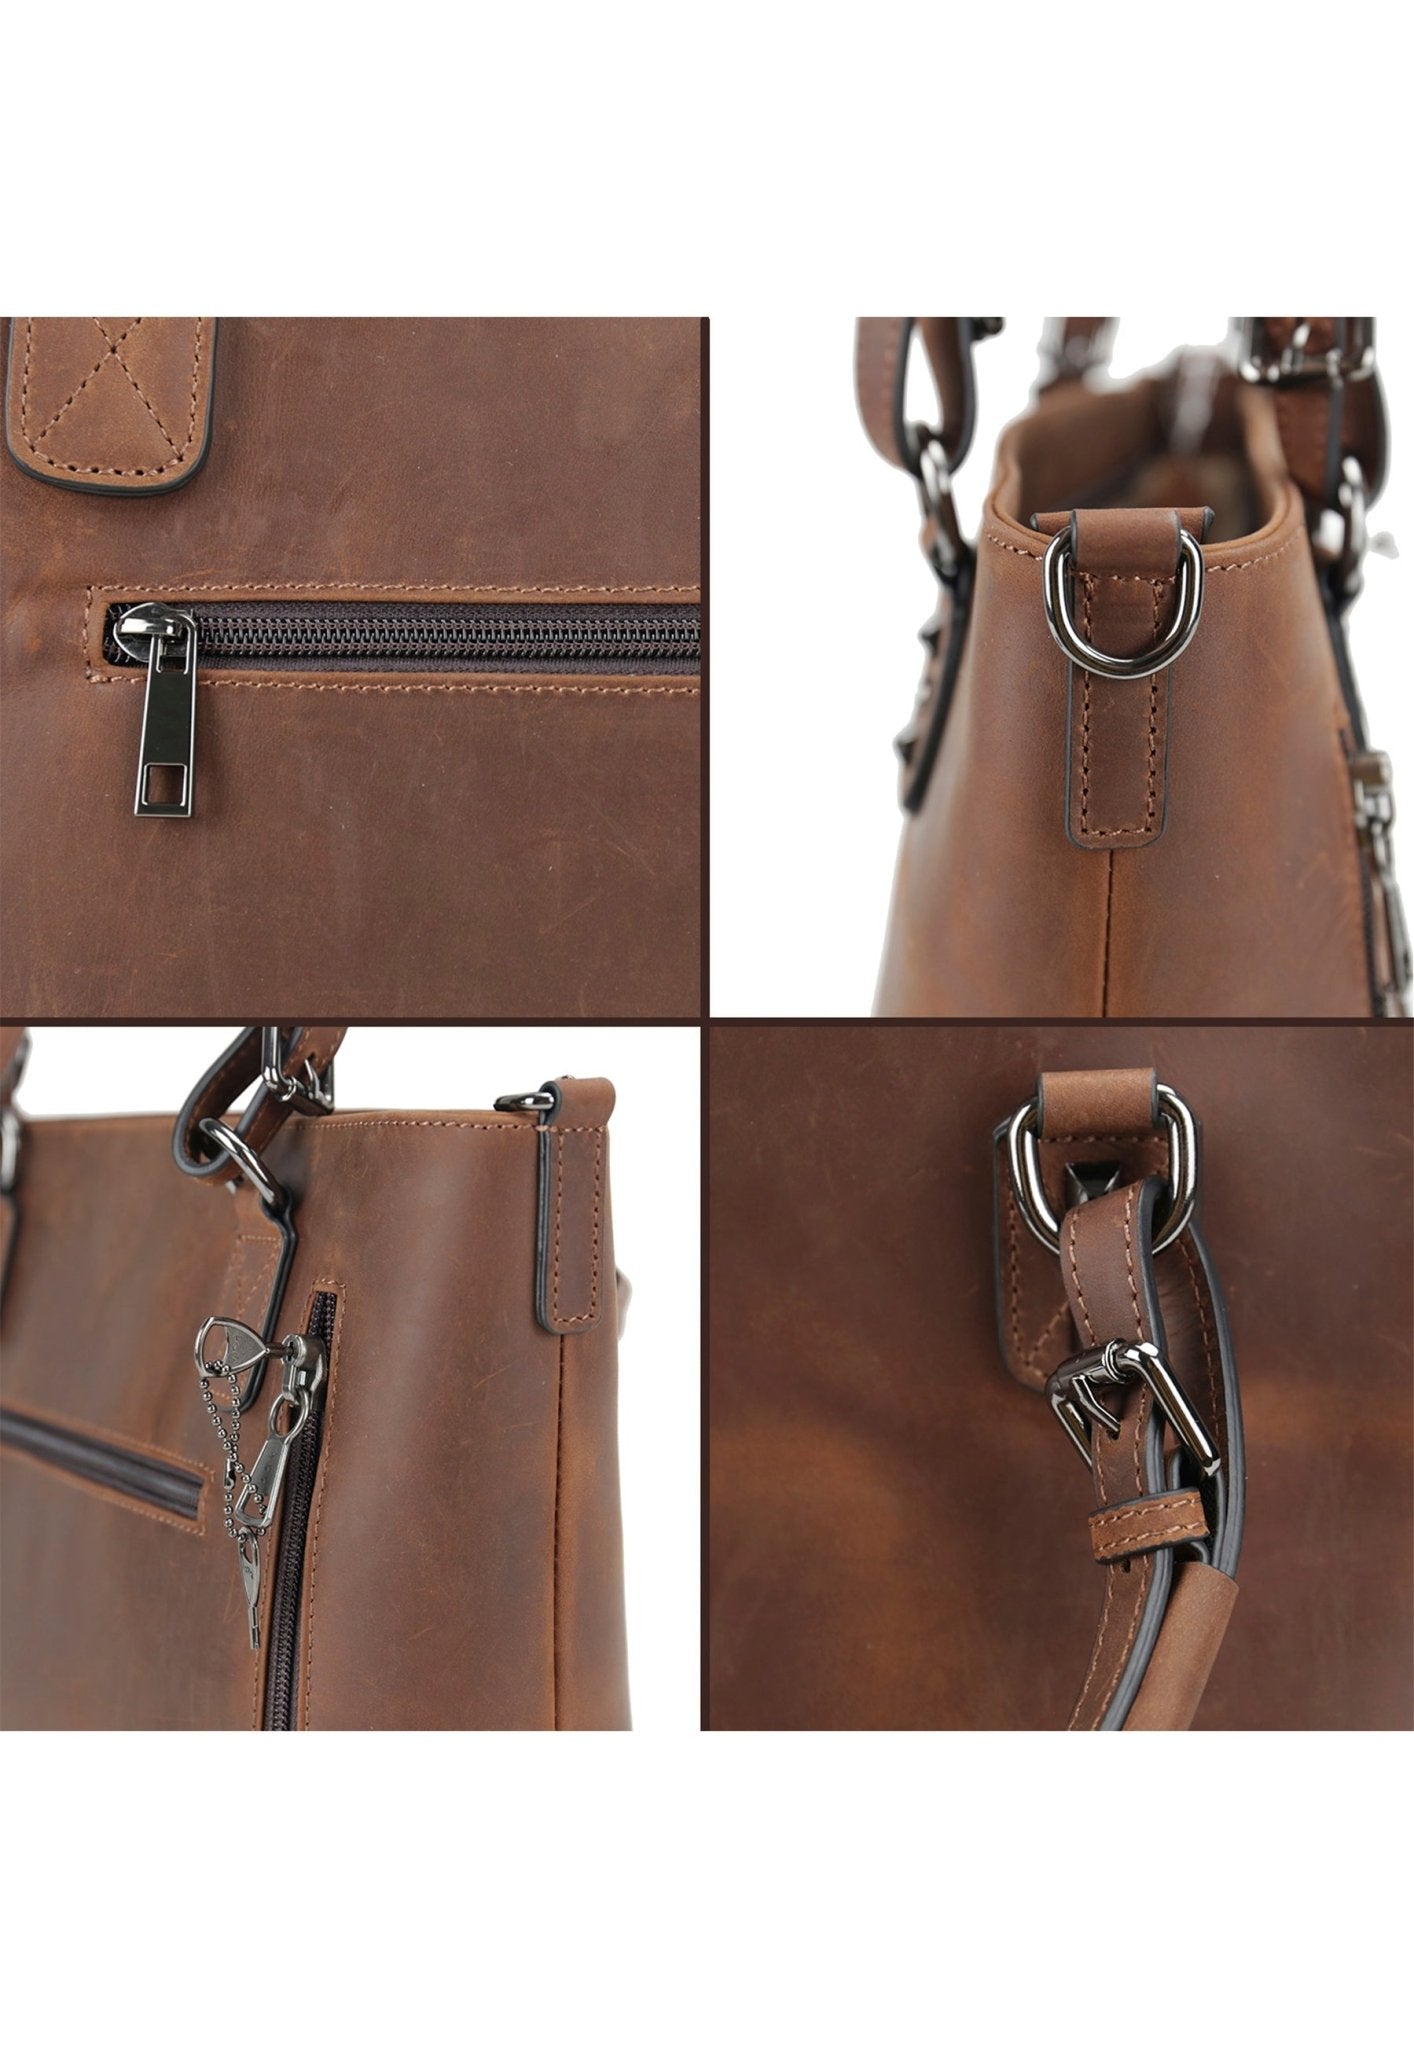 Bailey leather pistol purse - ArmedAF